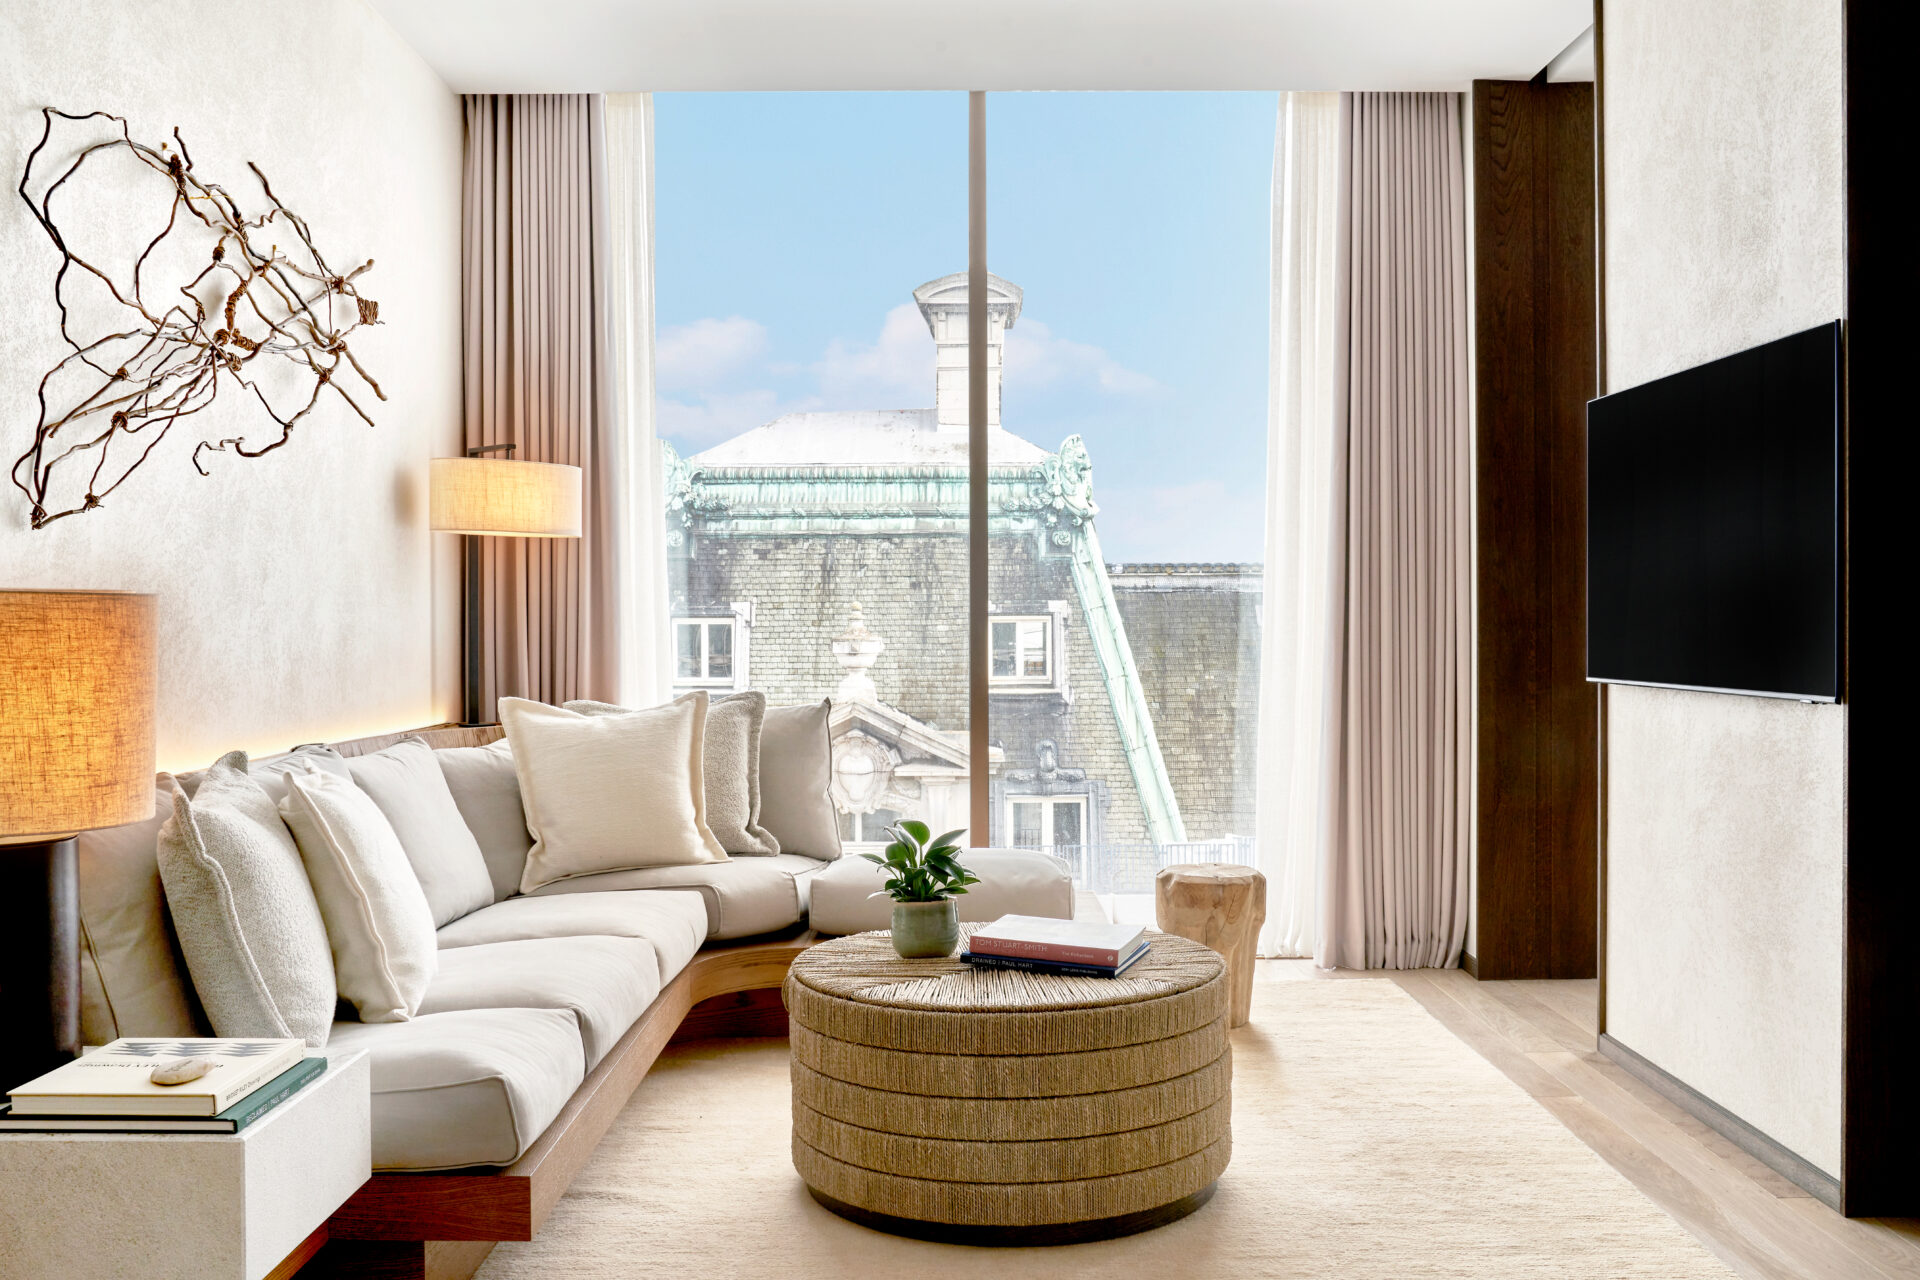 A skyline suite inside 1 Hotel Mayfair, overlooking the Ritz London